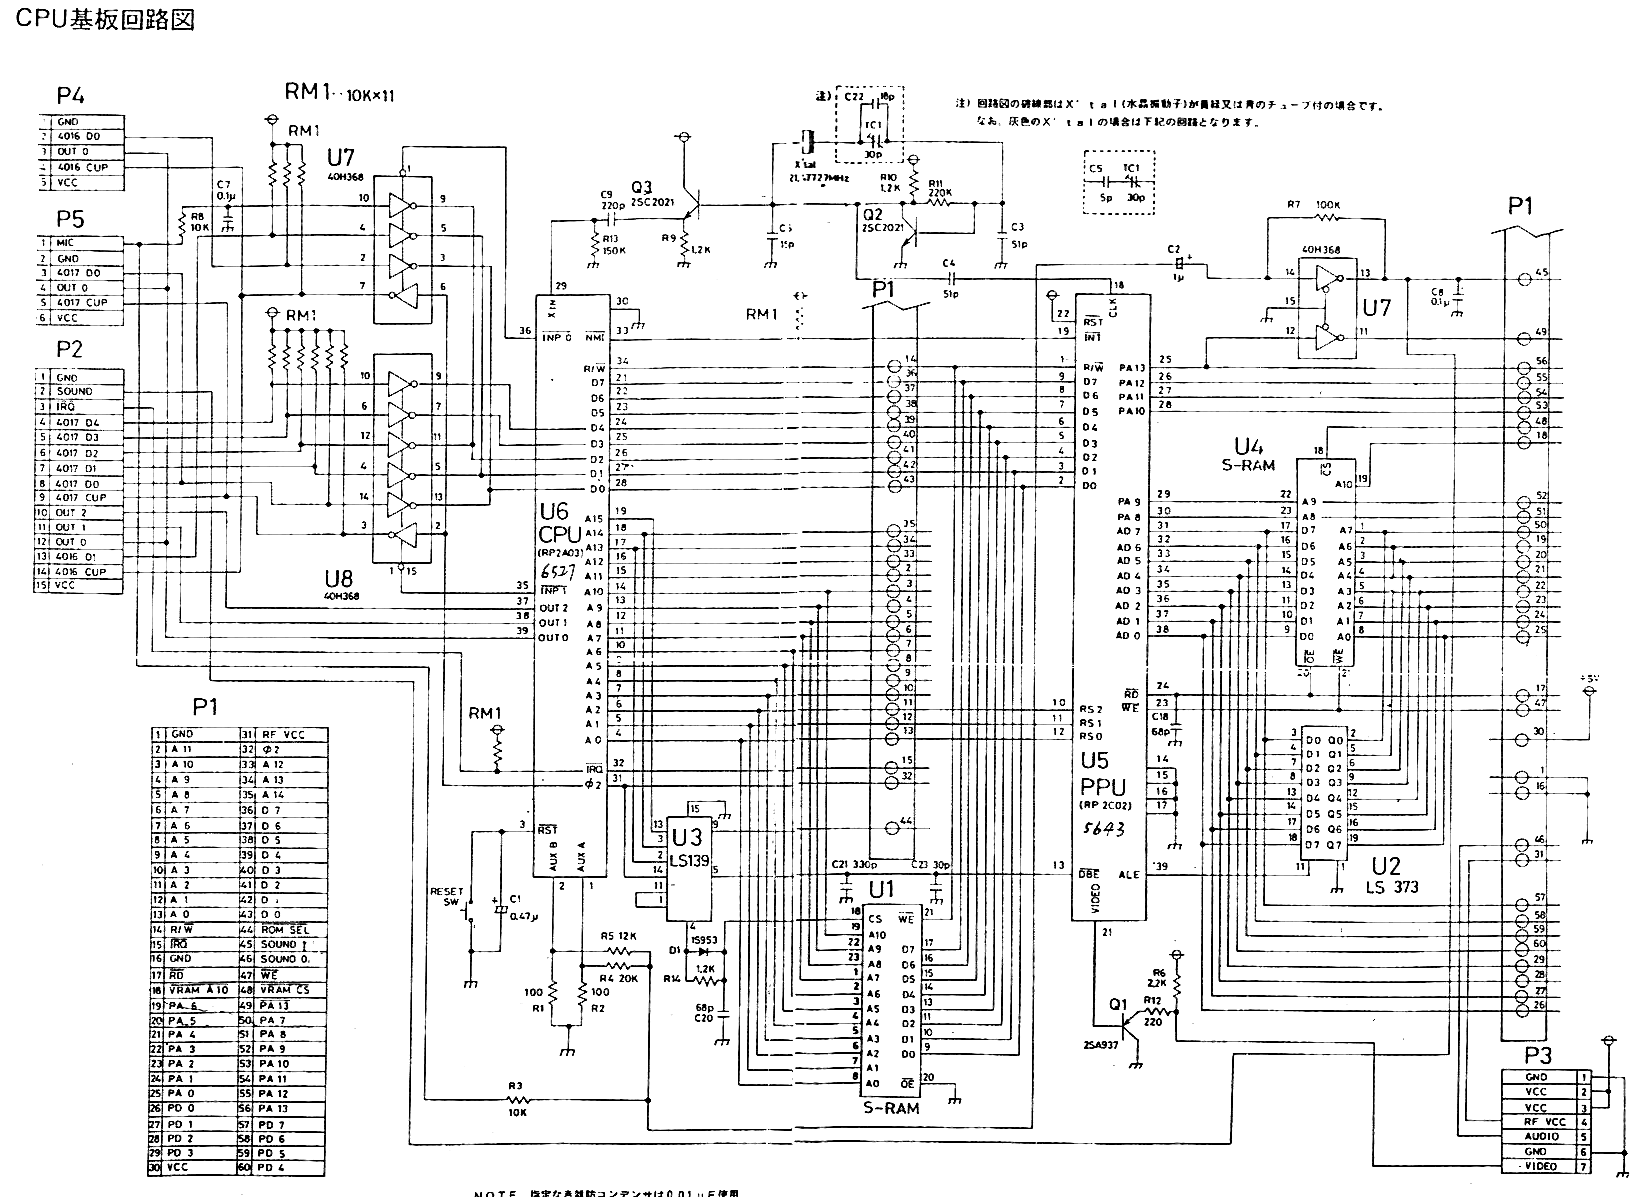 N64 Controller Wiring Diagram, N64, Get Free Image About